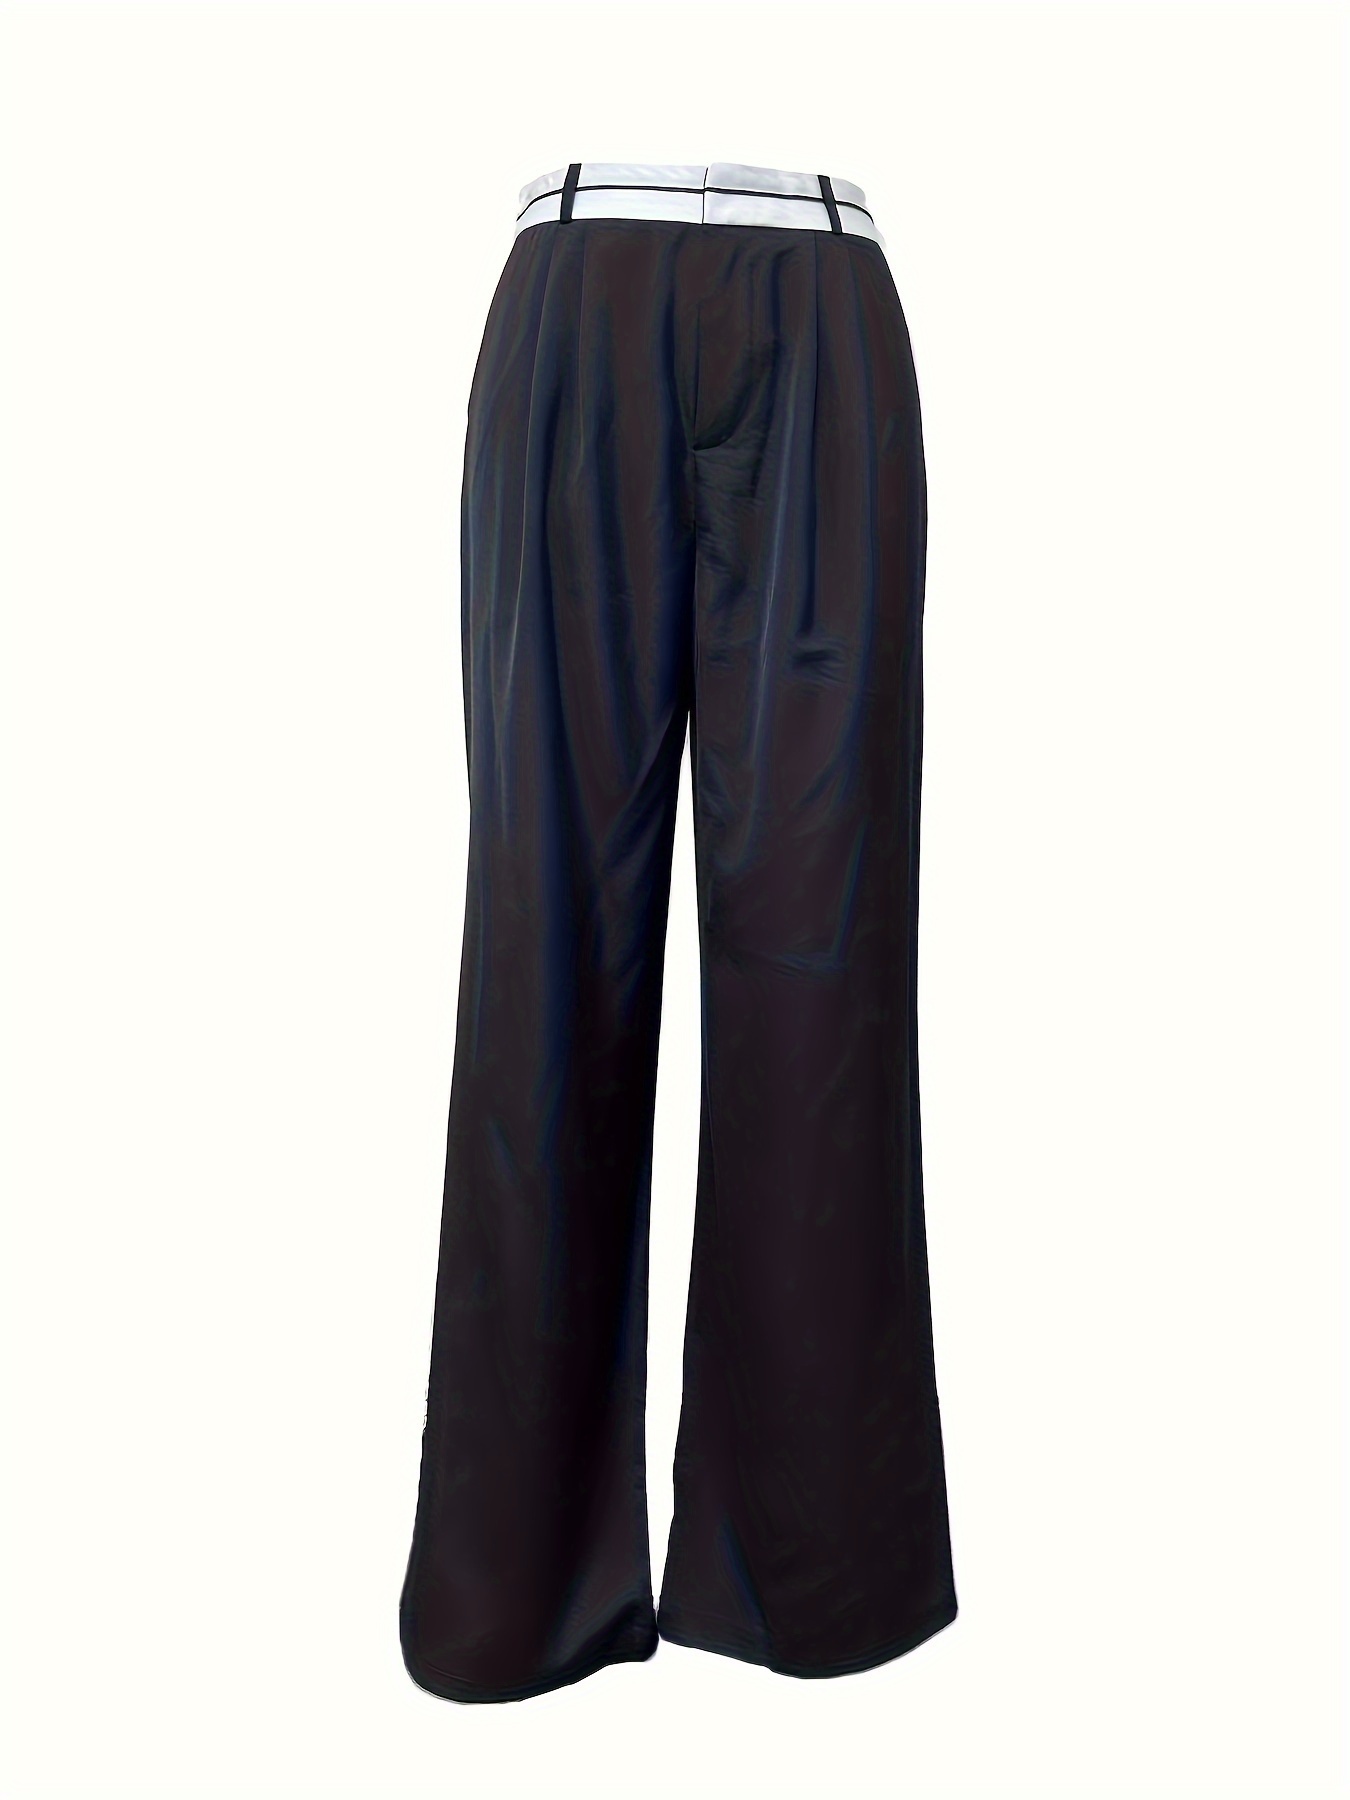 Black Color Block Pants - High-Rise Sweater Pants - Sweater Pants